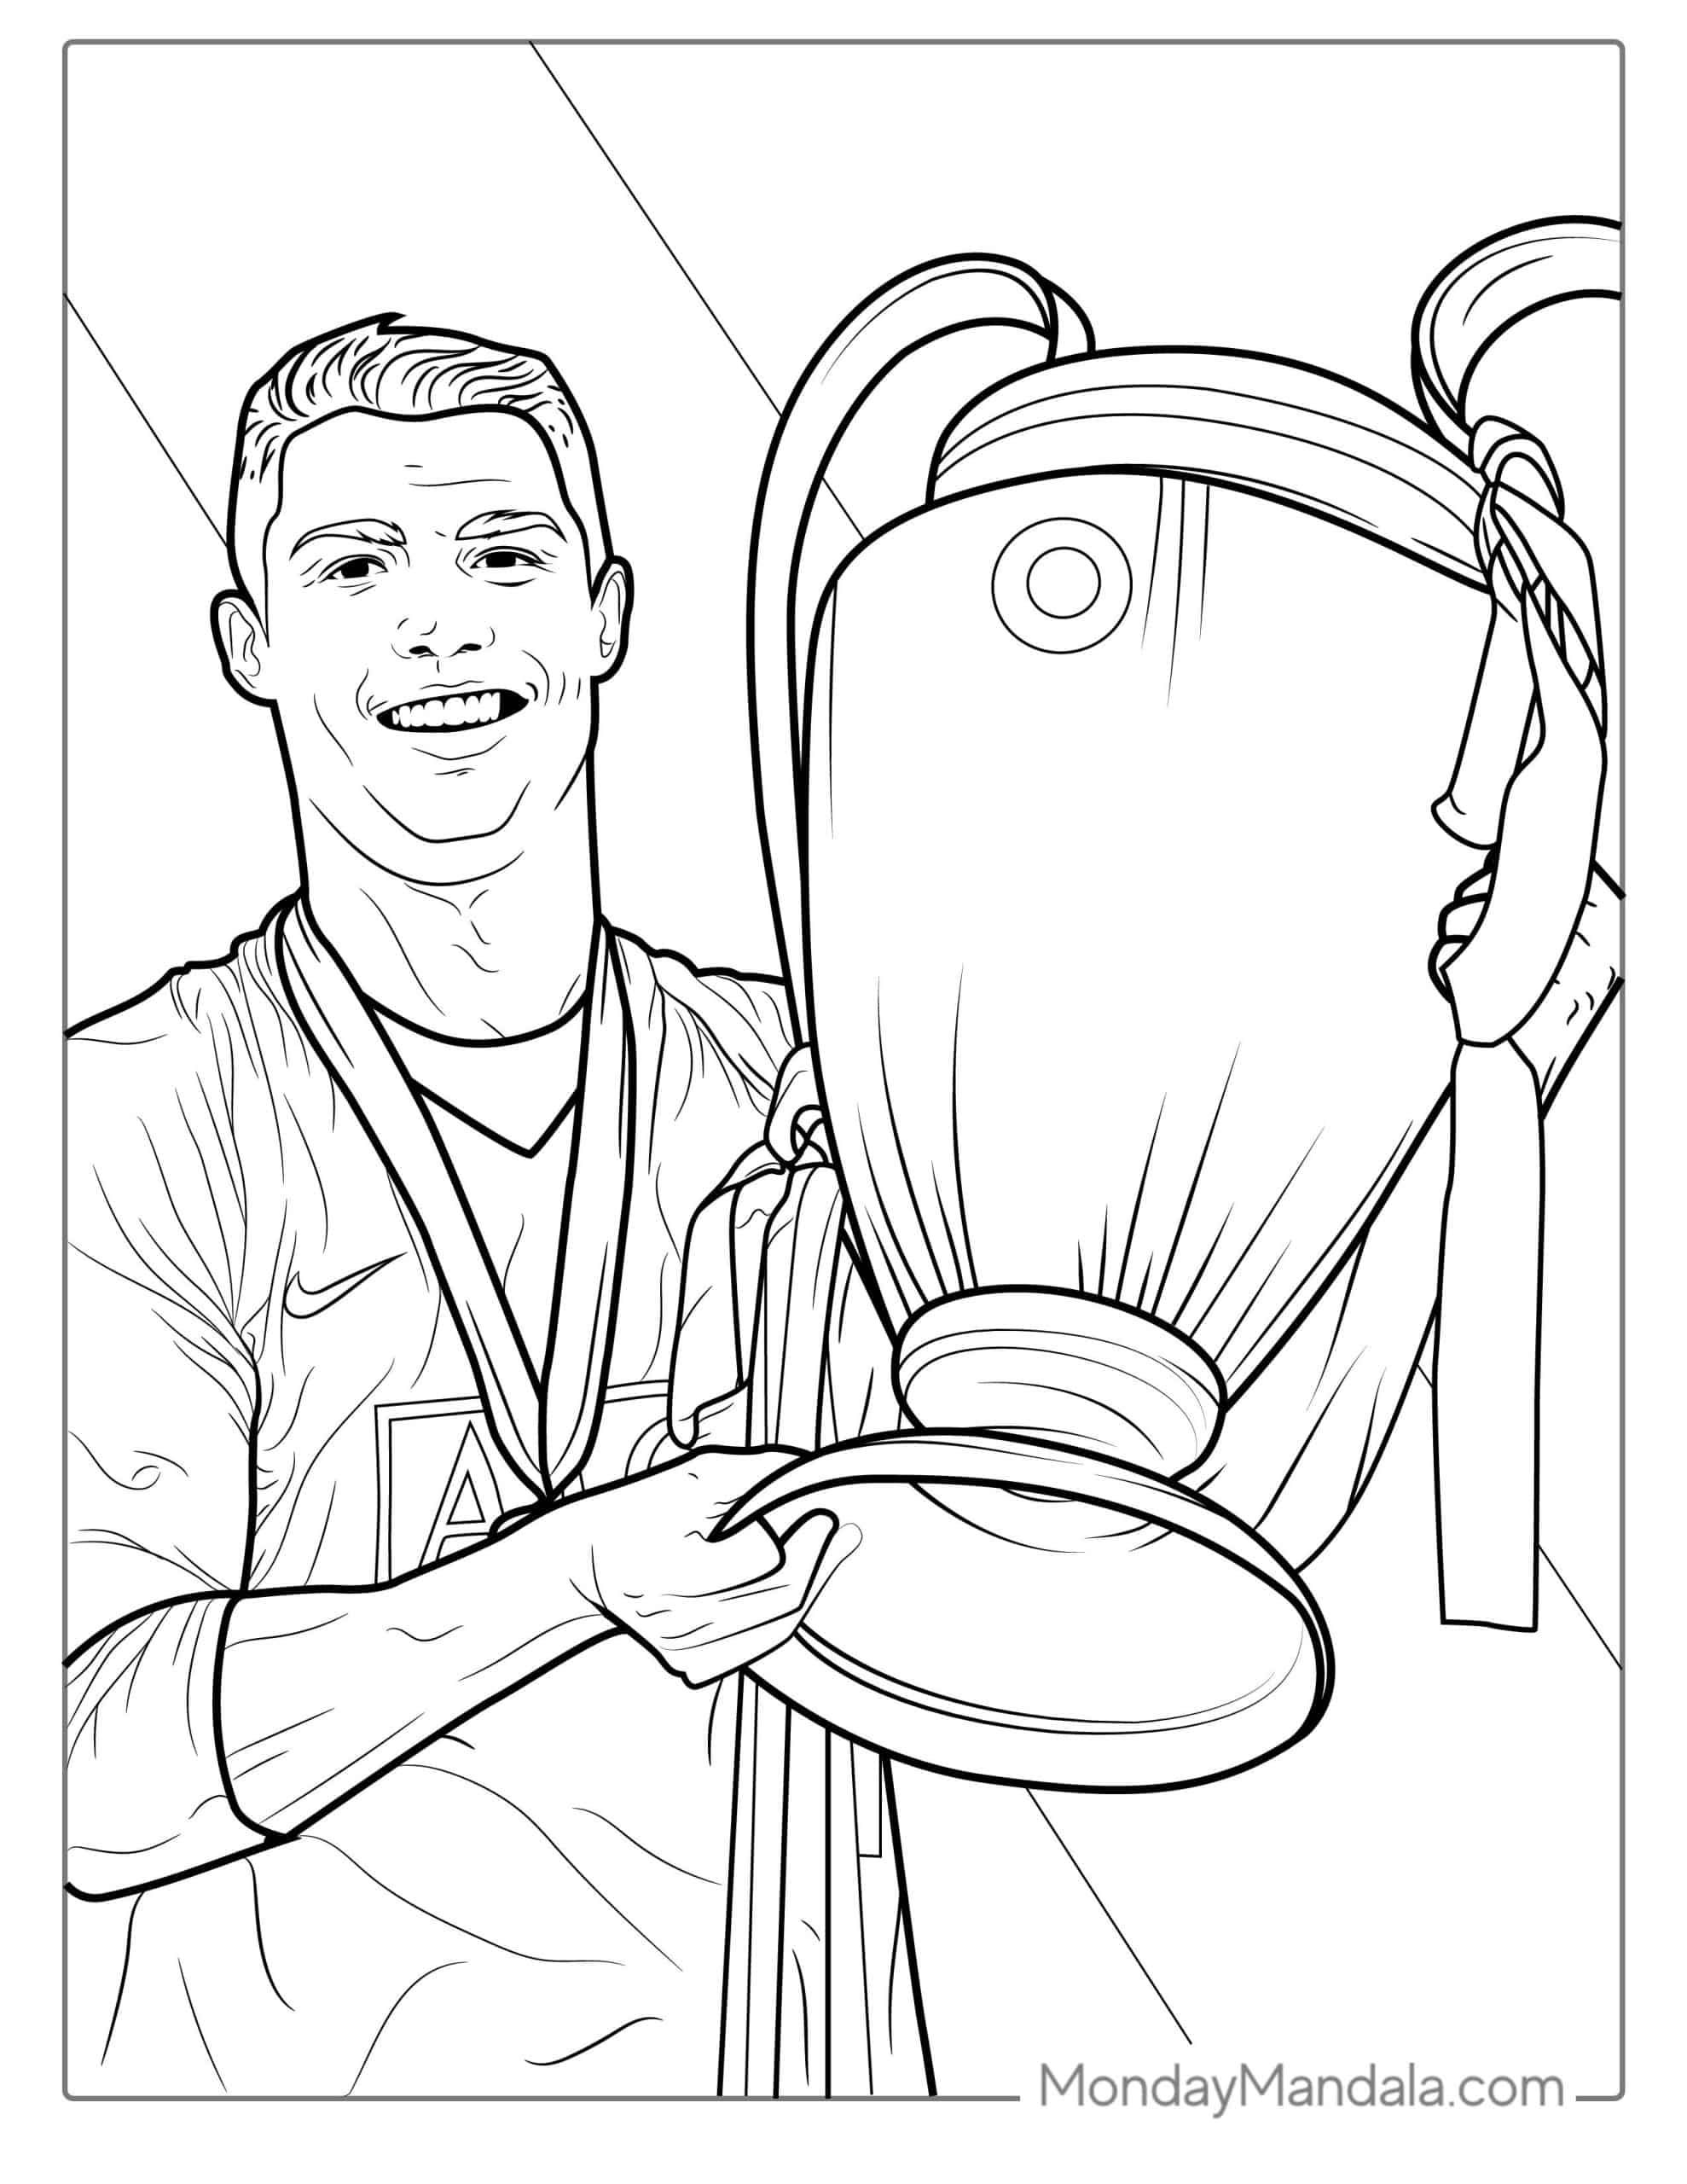 Ronaldo coloring pages free pdf printables coloring pages ronaldo football coloring pages